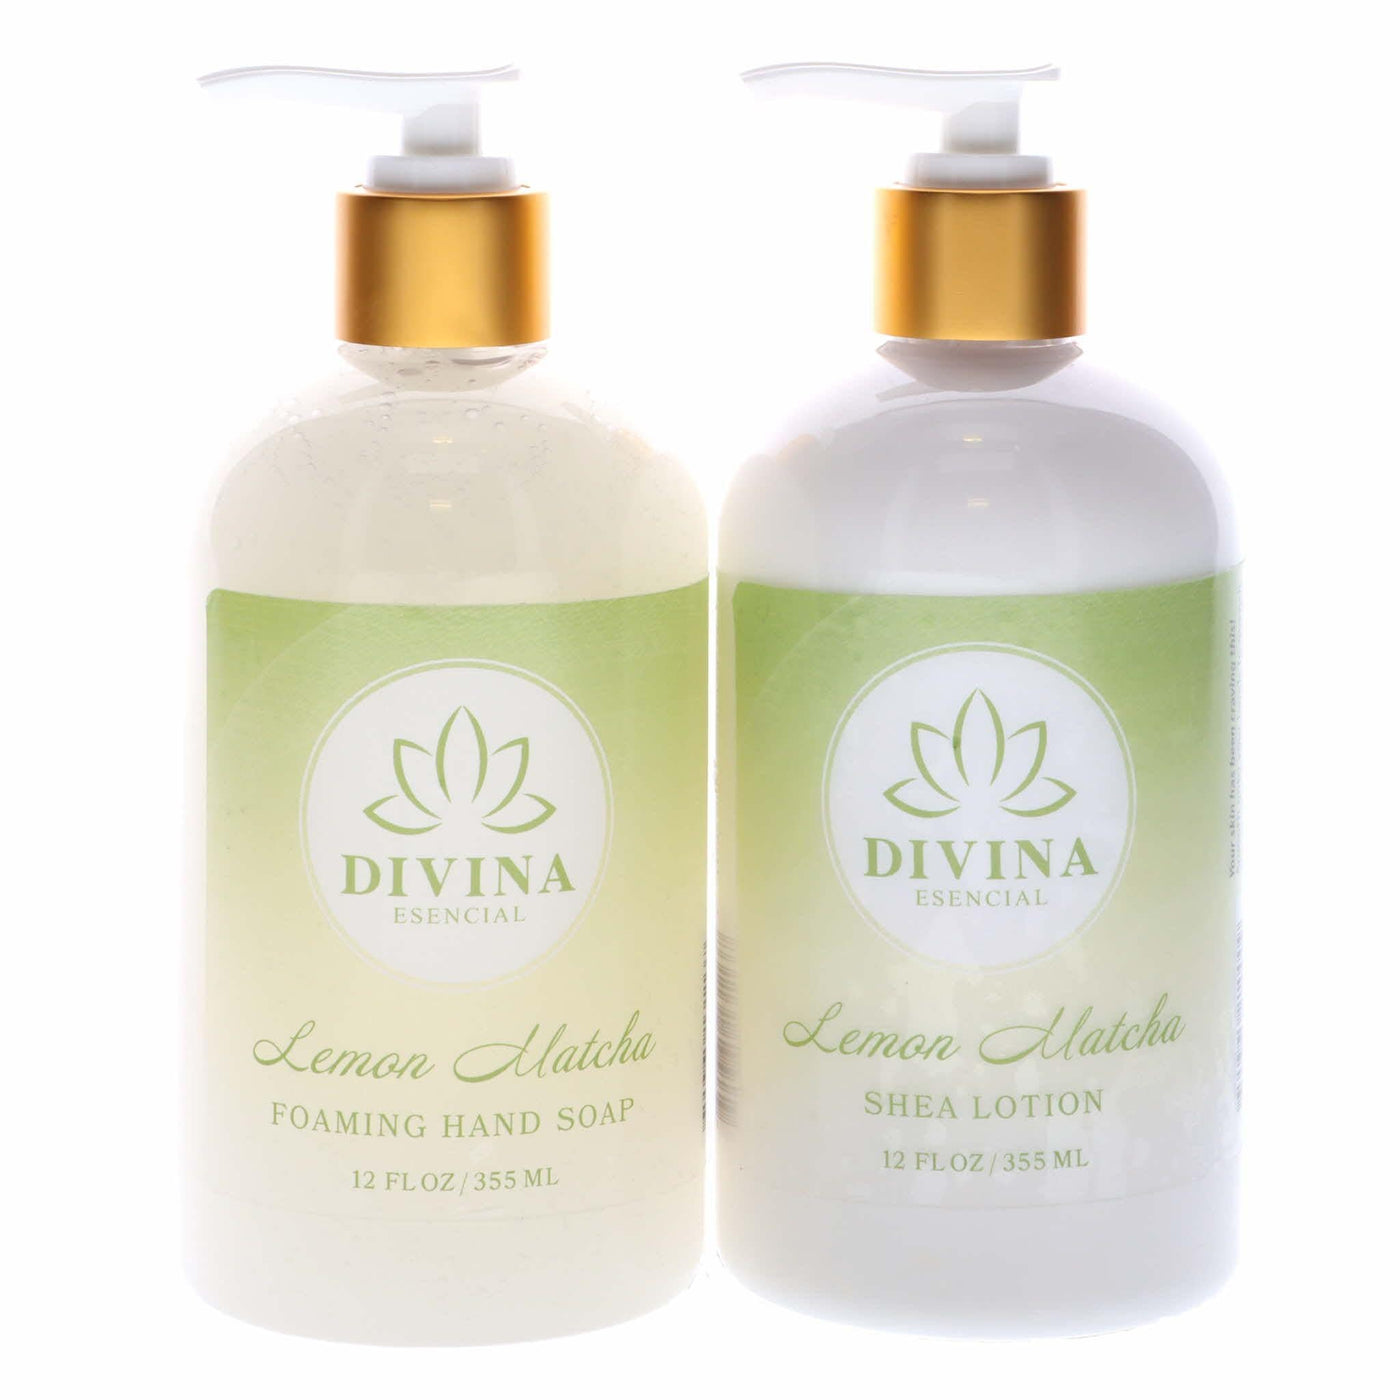 Divina Esencial Hand Soap & Shea Lotion Lemon Matcha 2-Piece Set